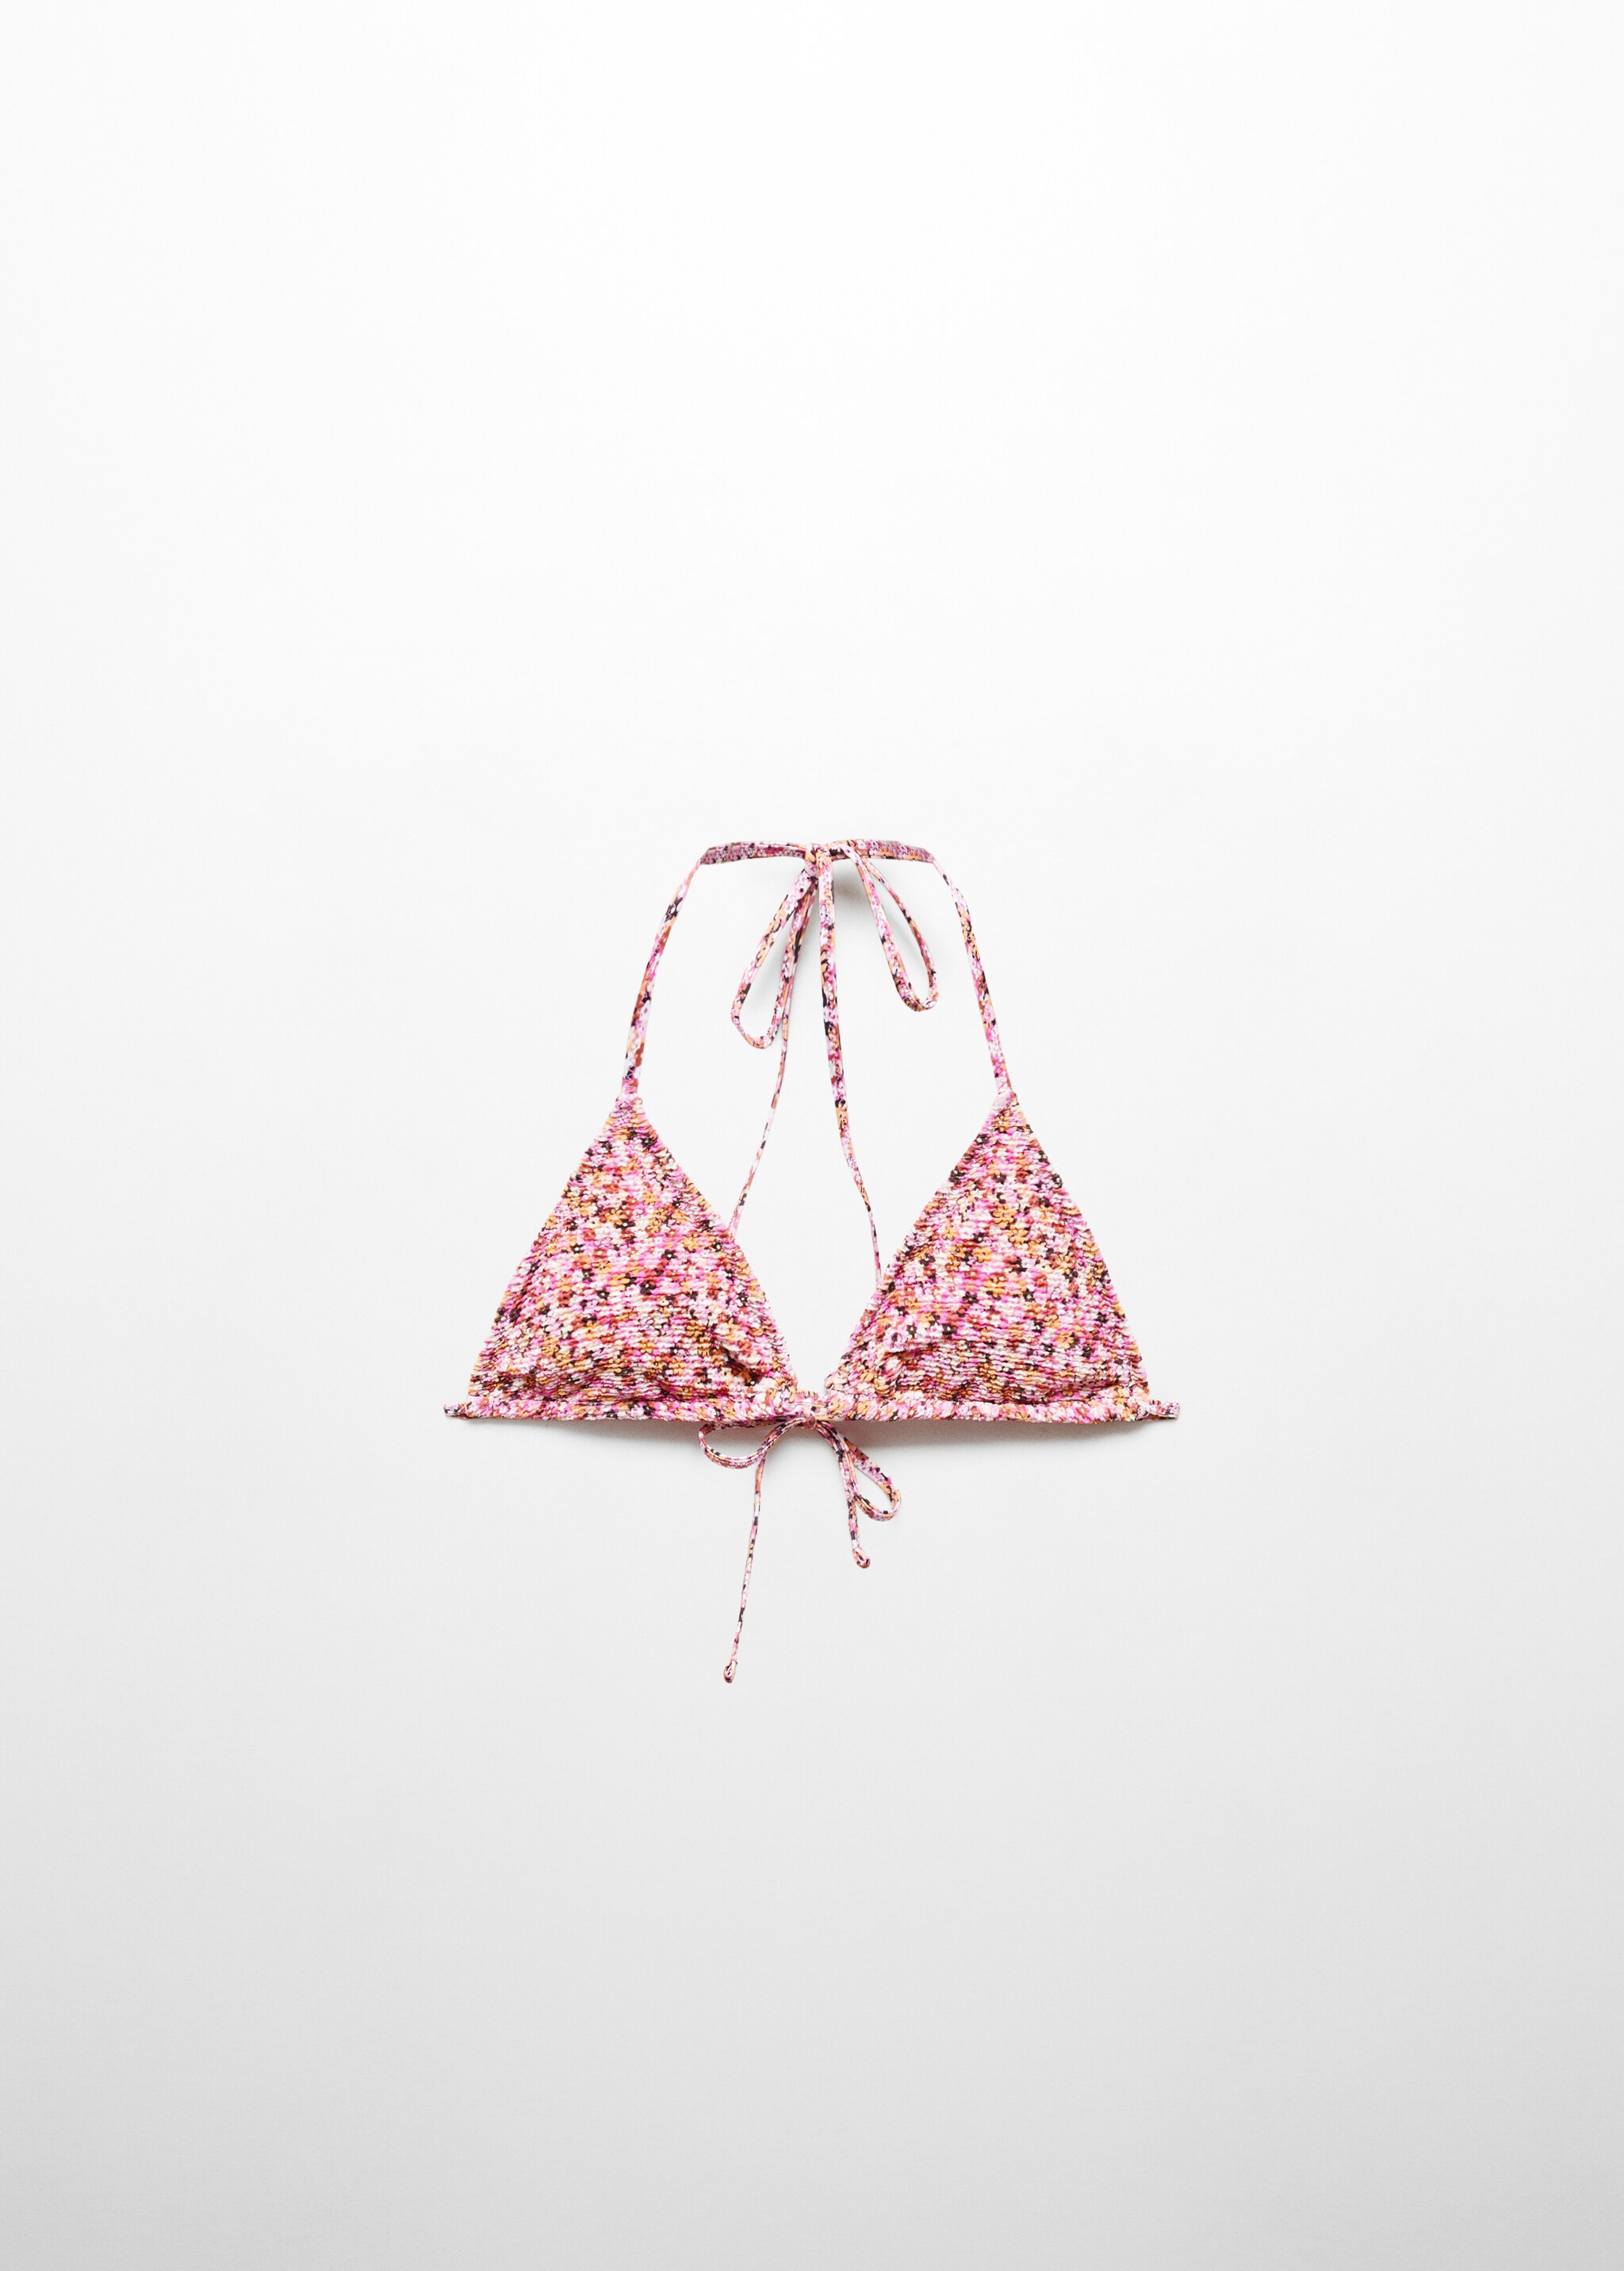 Haut bikini triangle fleuri - Article sans modèle